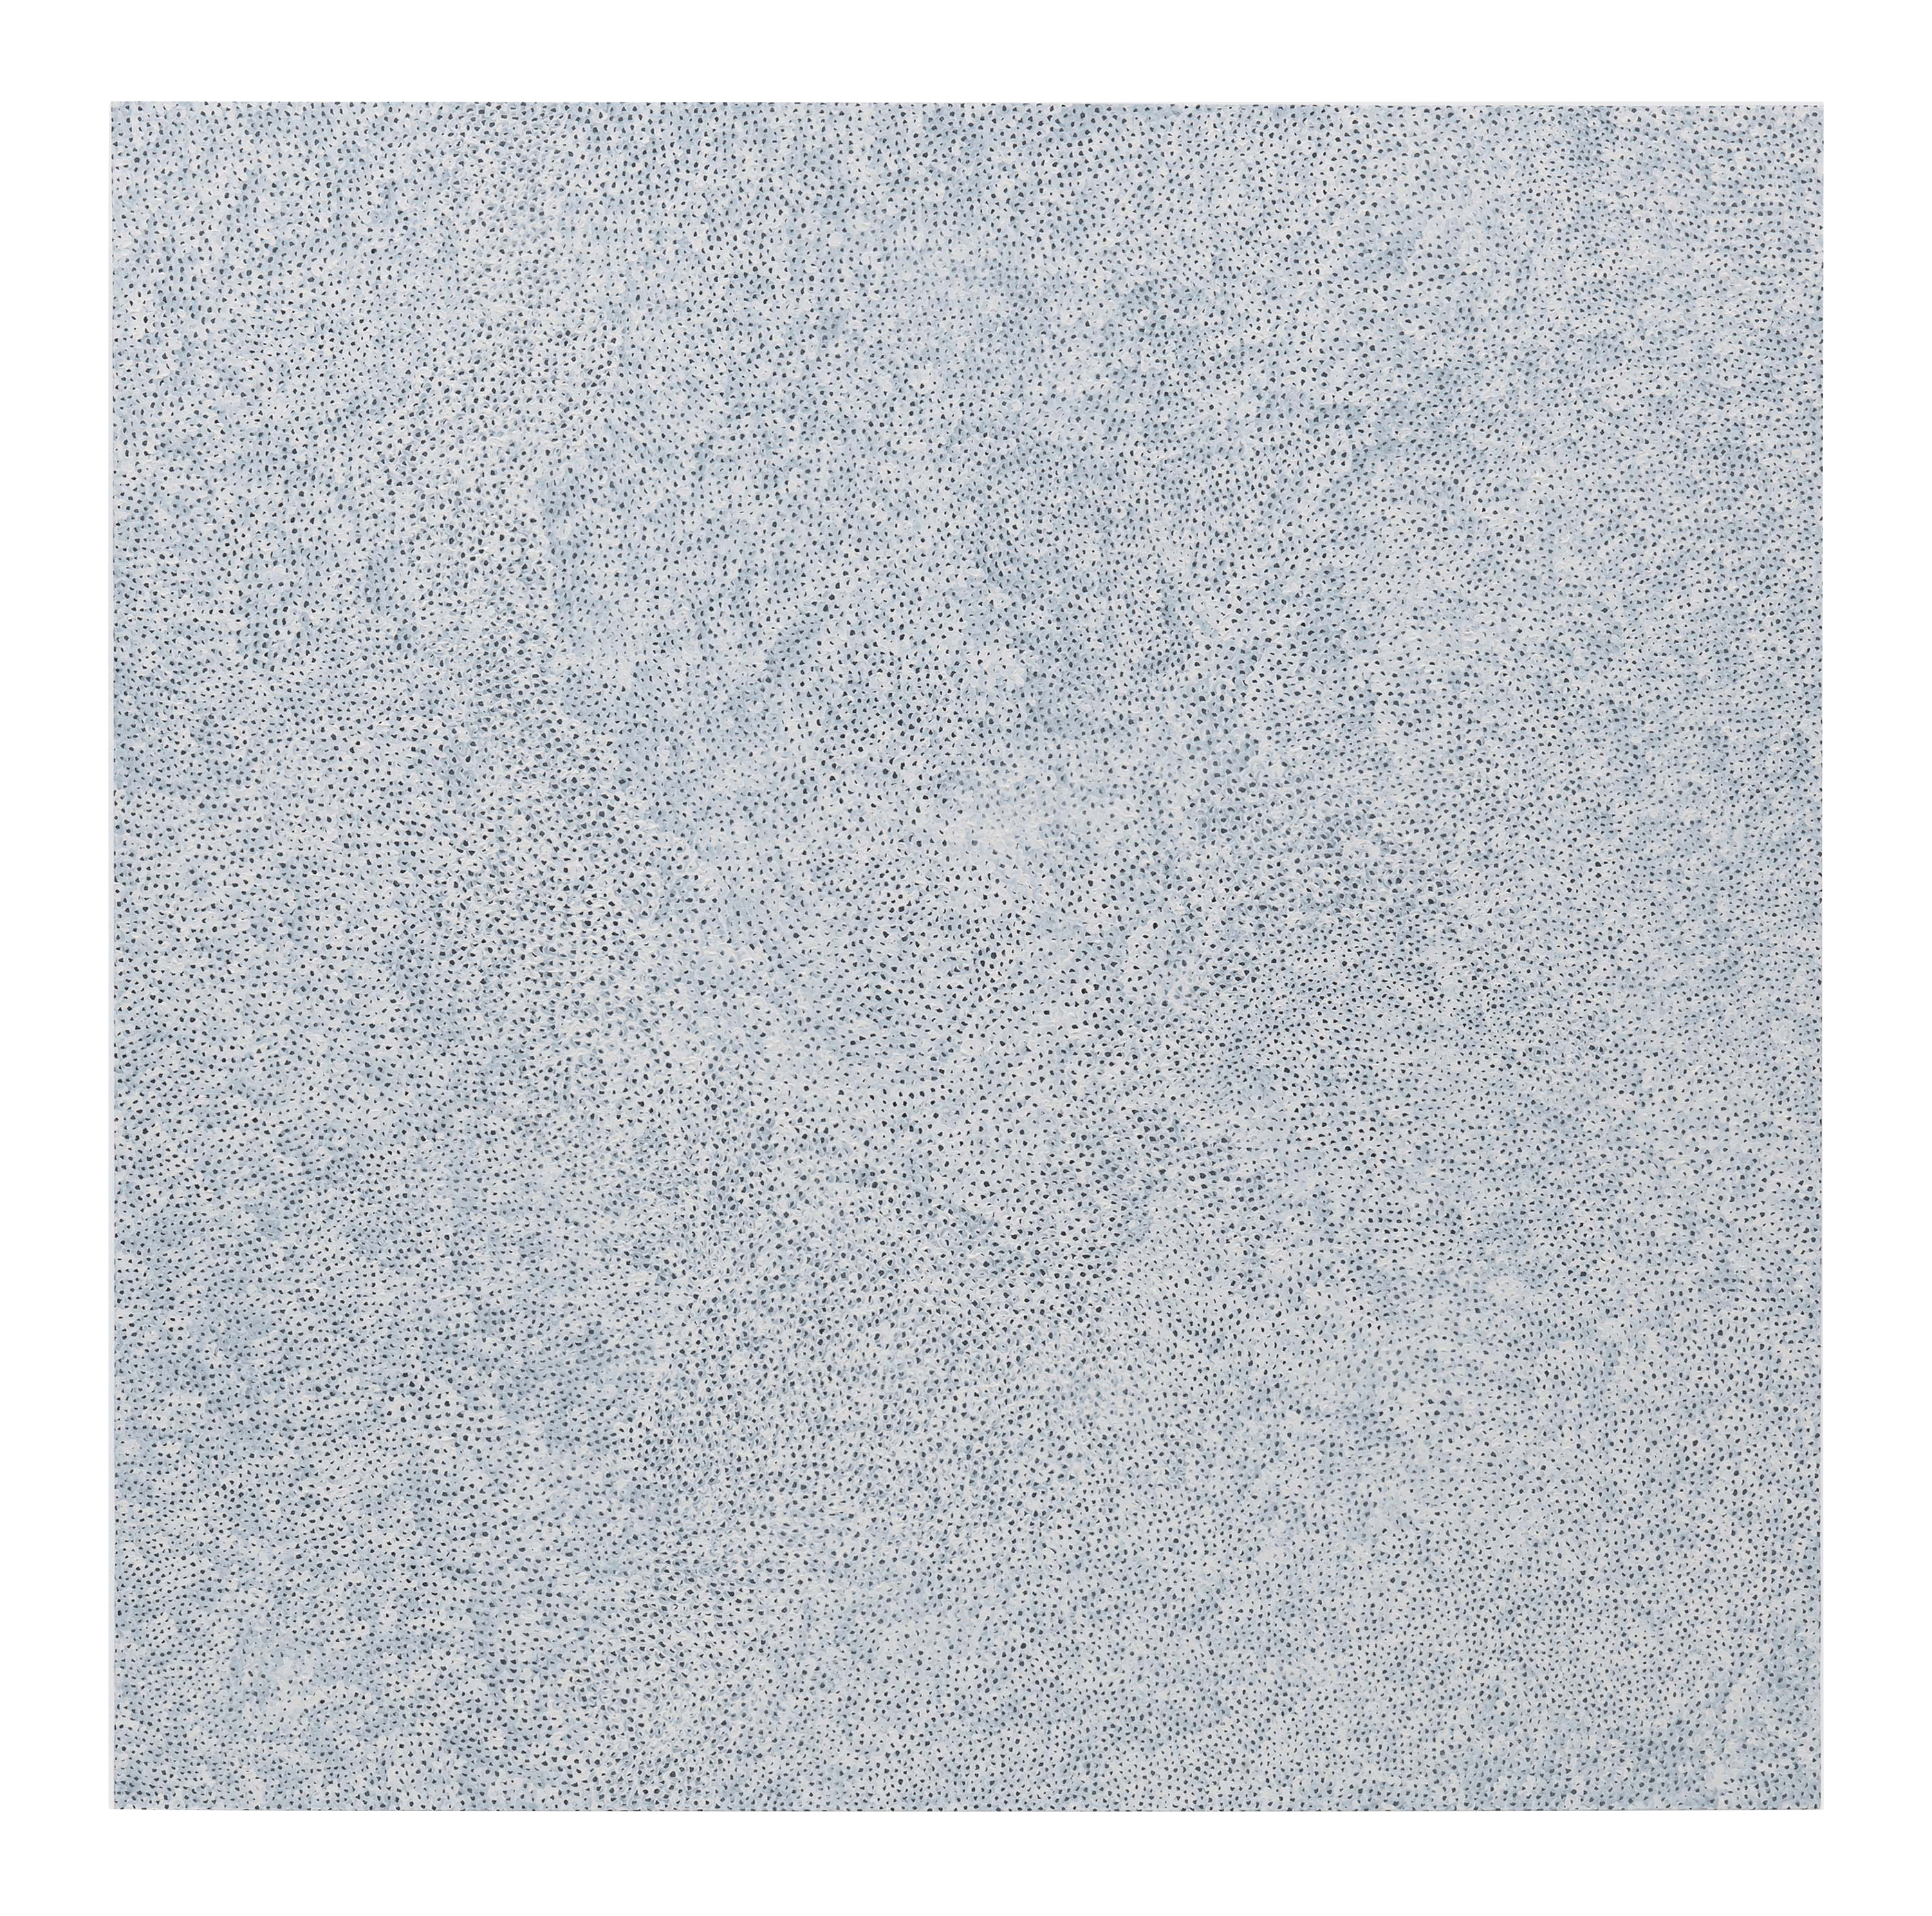 Yayoi Kusama Iinfinity-nets (KFMRB), 2018, Painting, Acrylic on canvas, 162.6 x 161.9 (cm), 64.0 x 63.7 (inch), USD 3,000,001 – 4,000,000 at David Zwirner